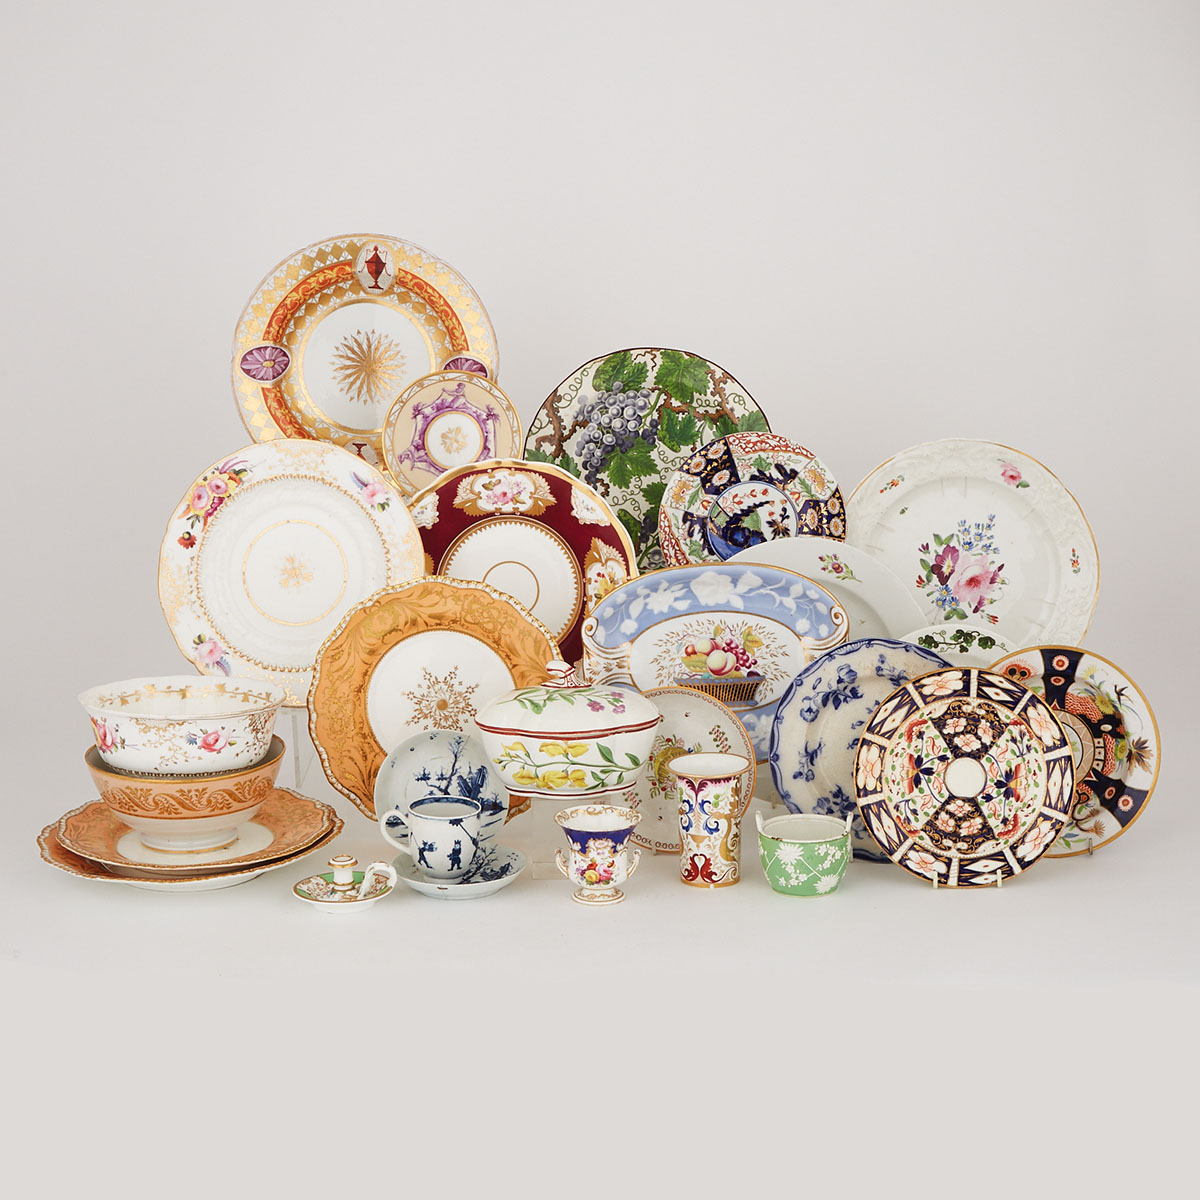 Group of English Ceramics, 18th/19th century